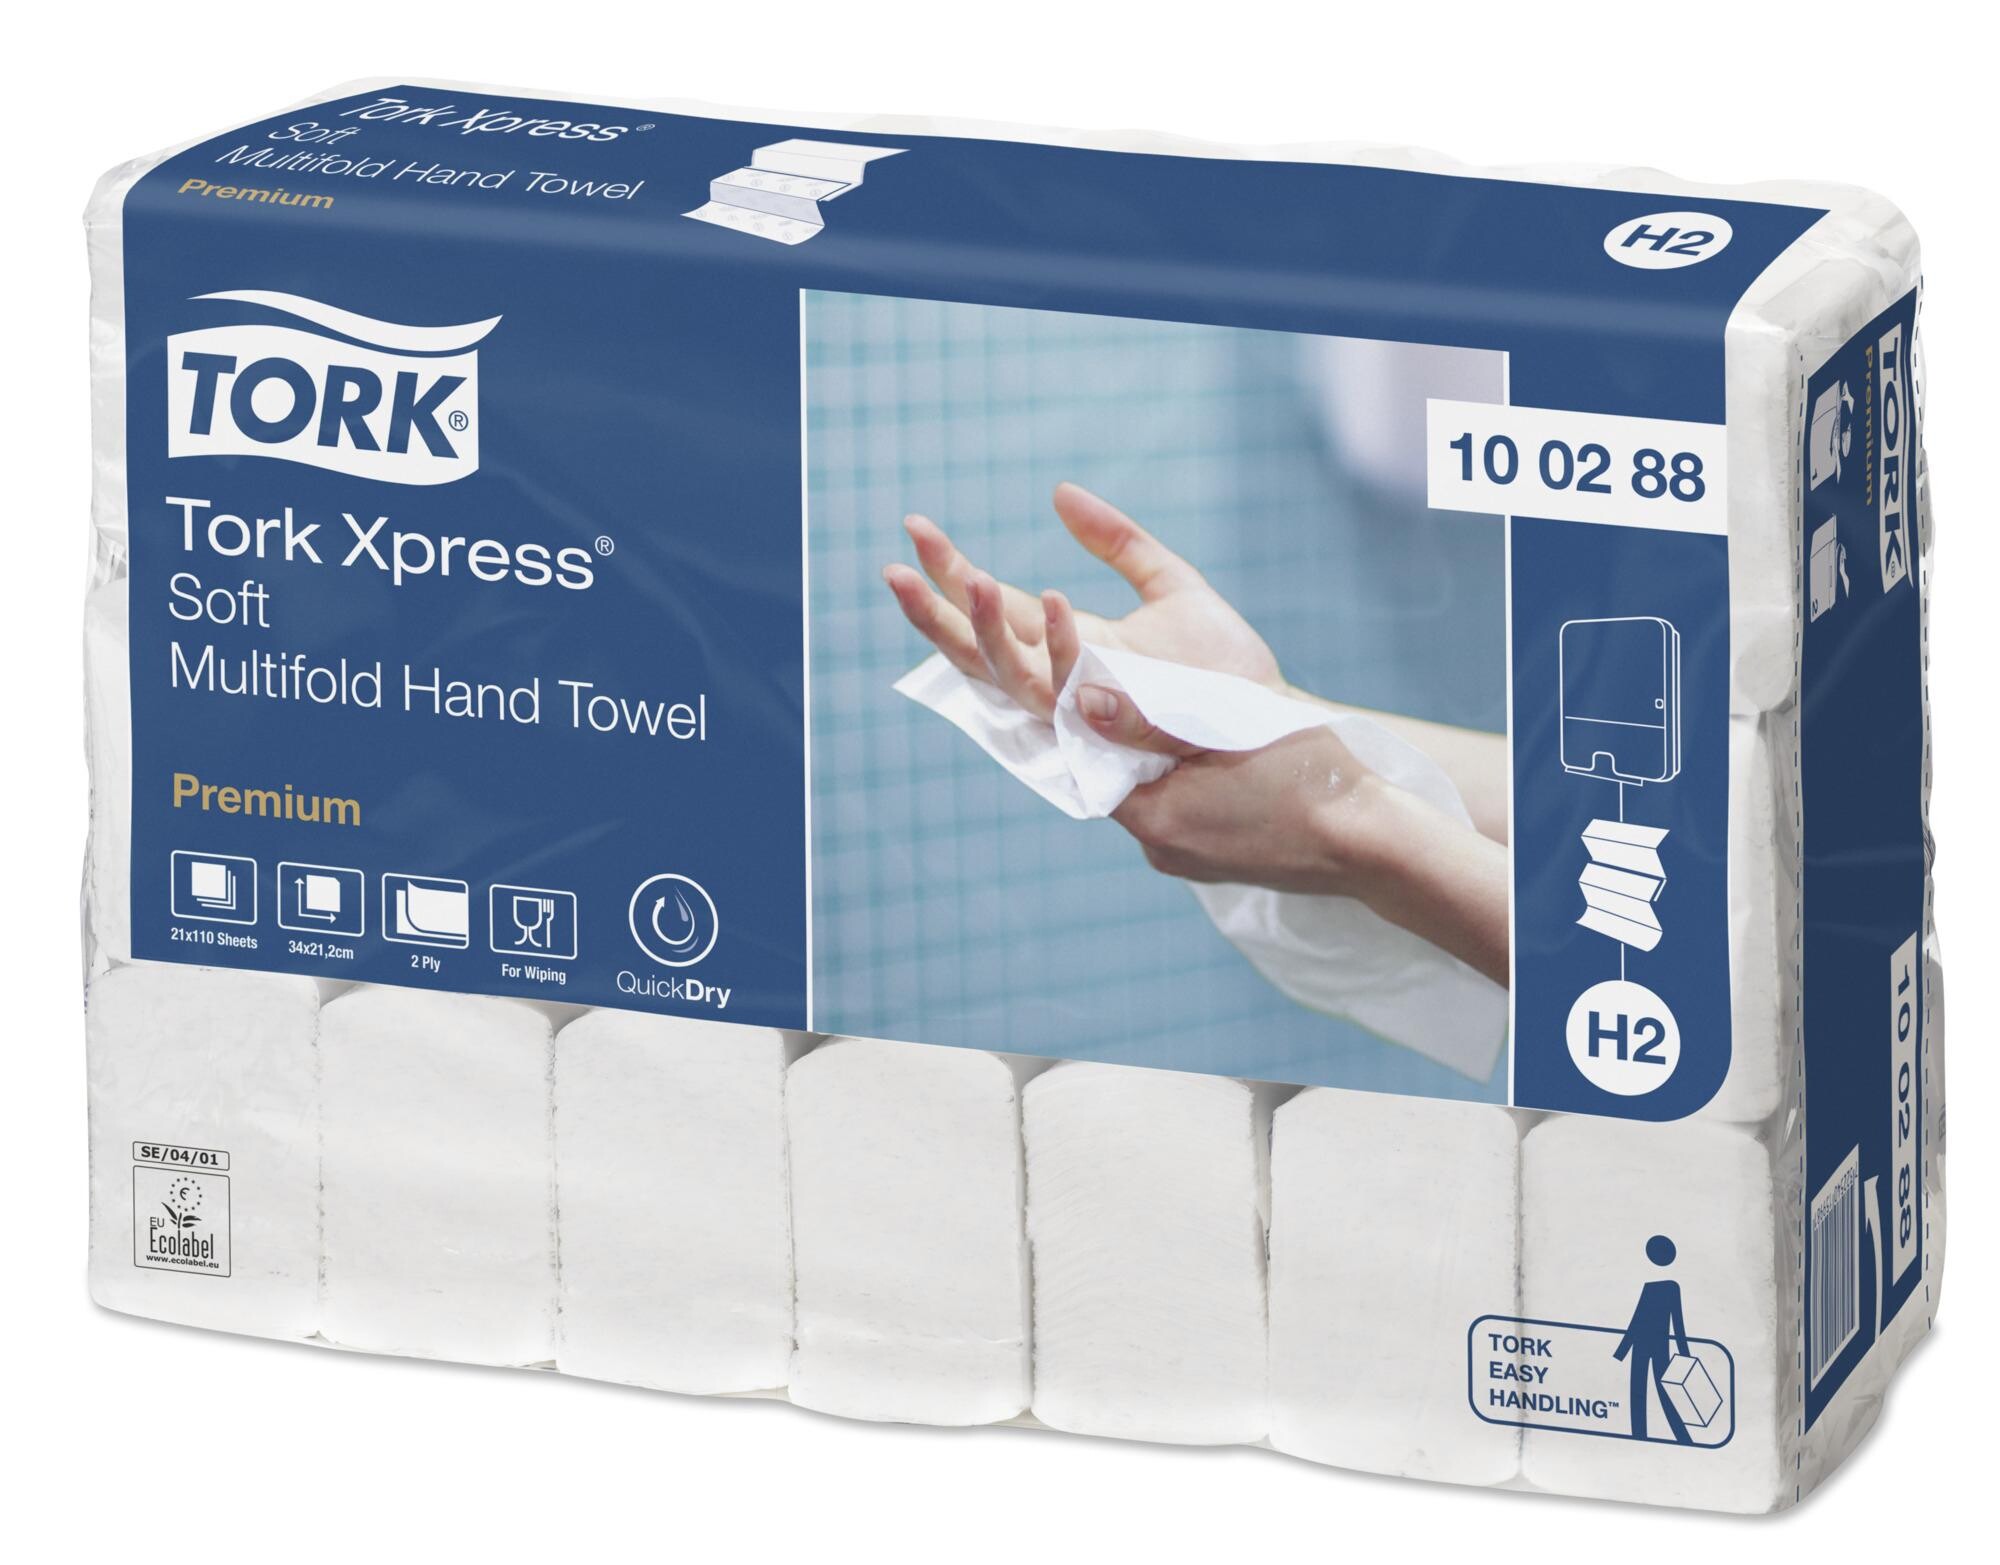 TORK Xpress Soft Multifold Hand Towel 100288